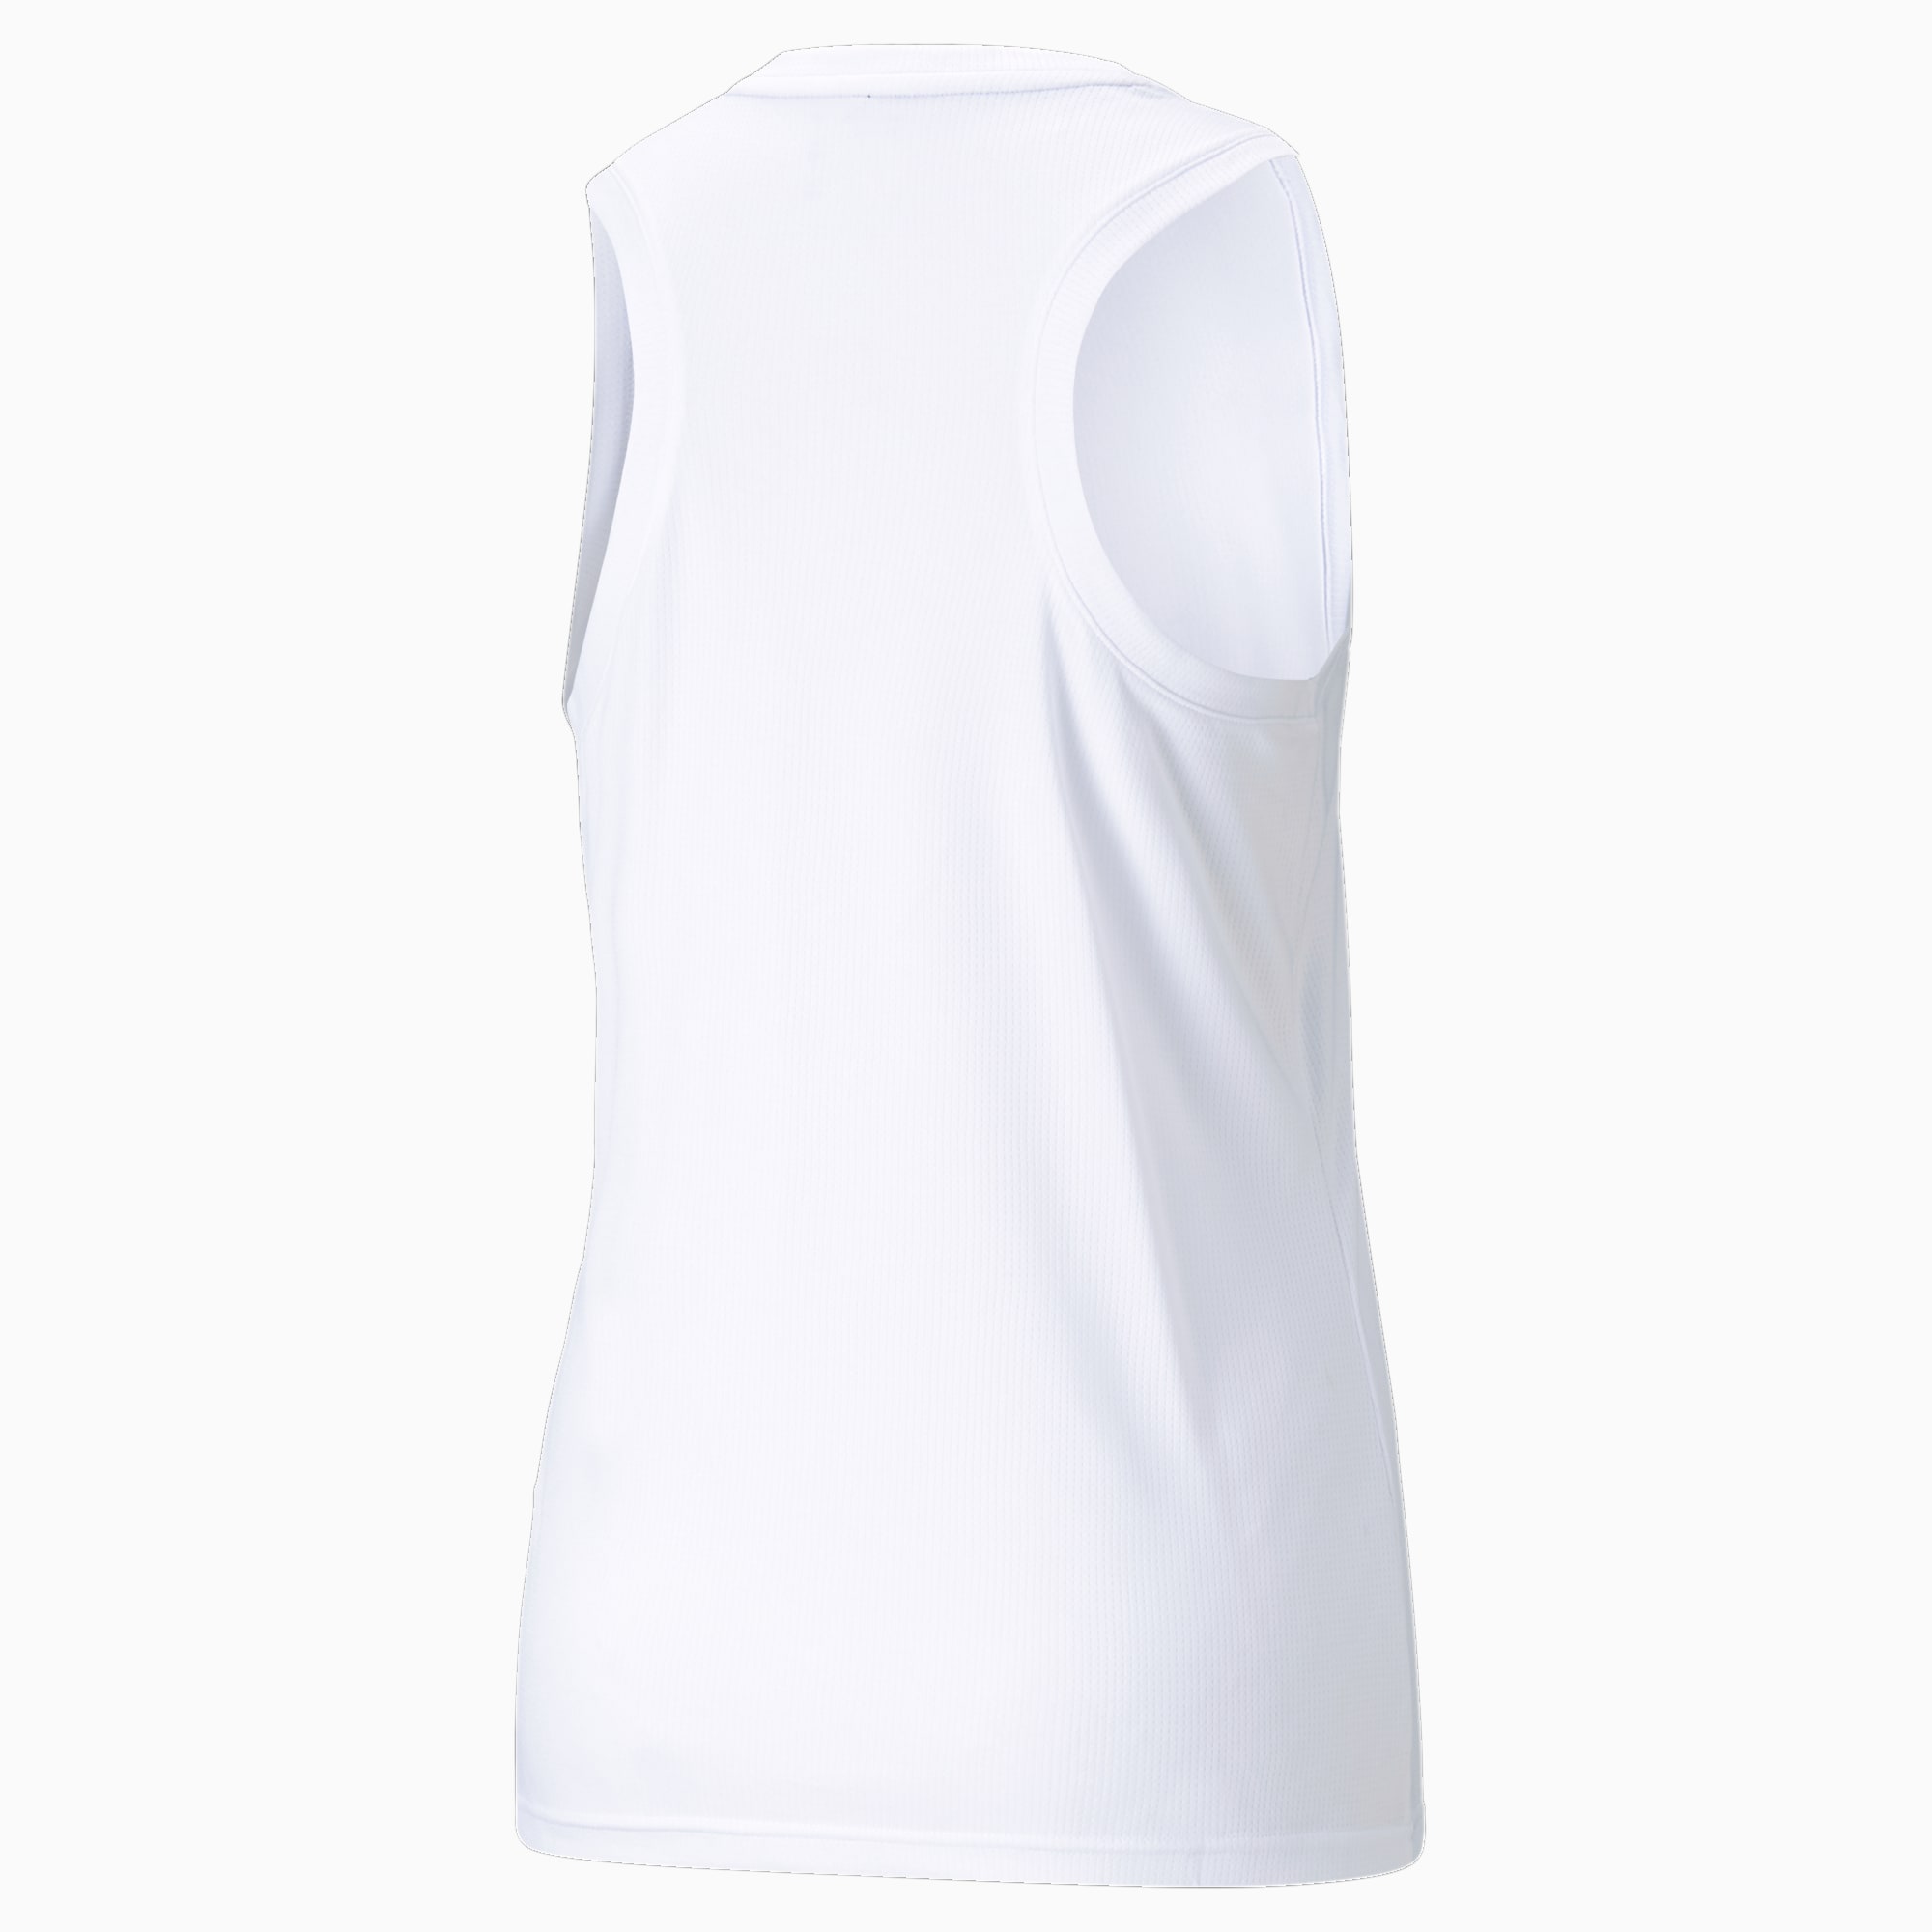 PUMA Performance Women's Training Tank Top Shirt, White, Size XXL, Clothing